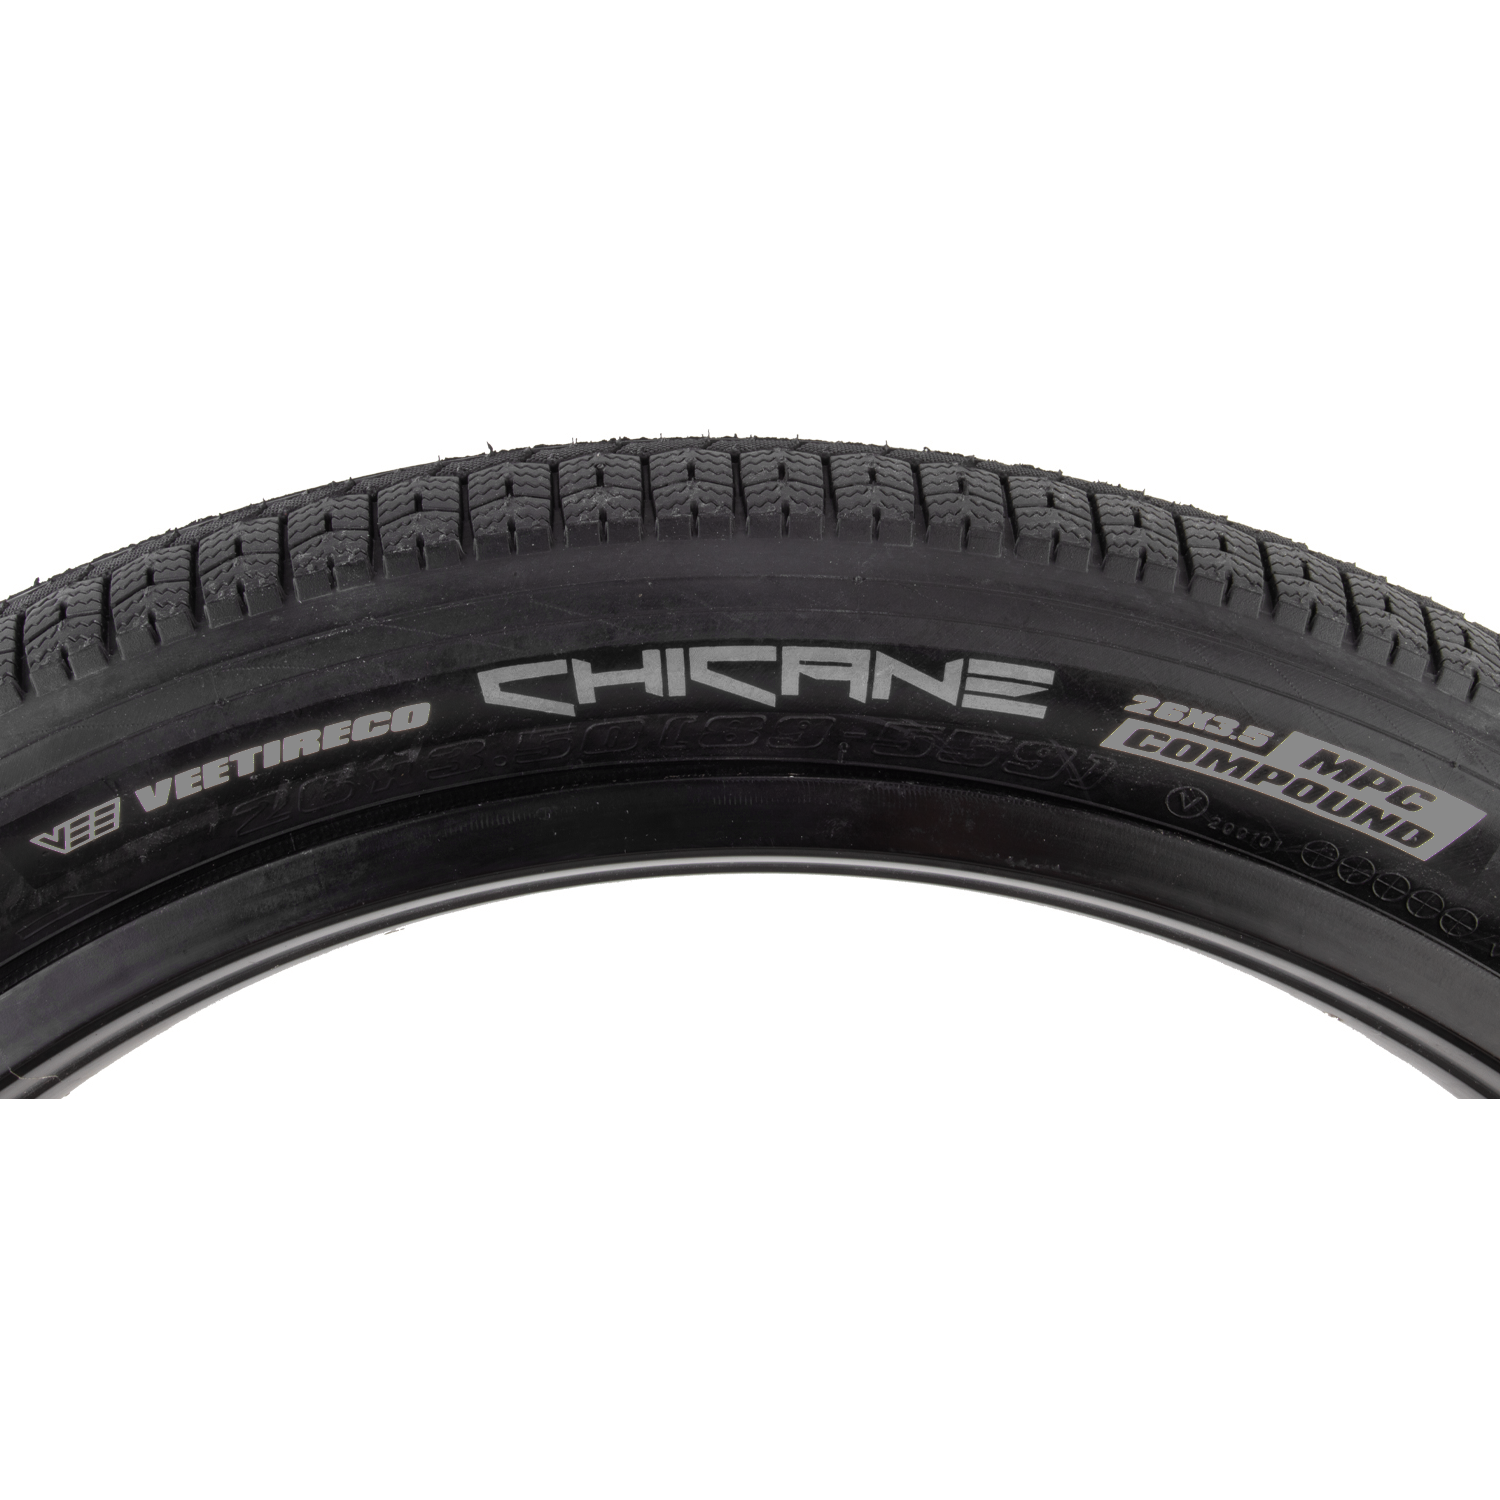 26x3.50 SE Racing Chicane BMX Cruiser tire - Black